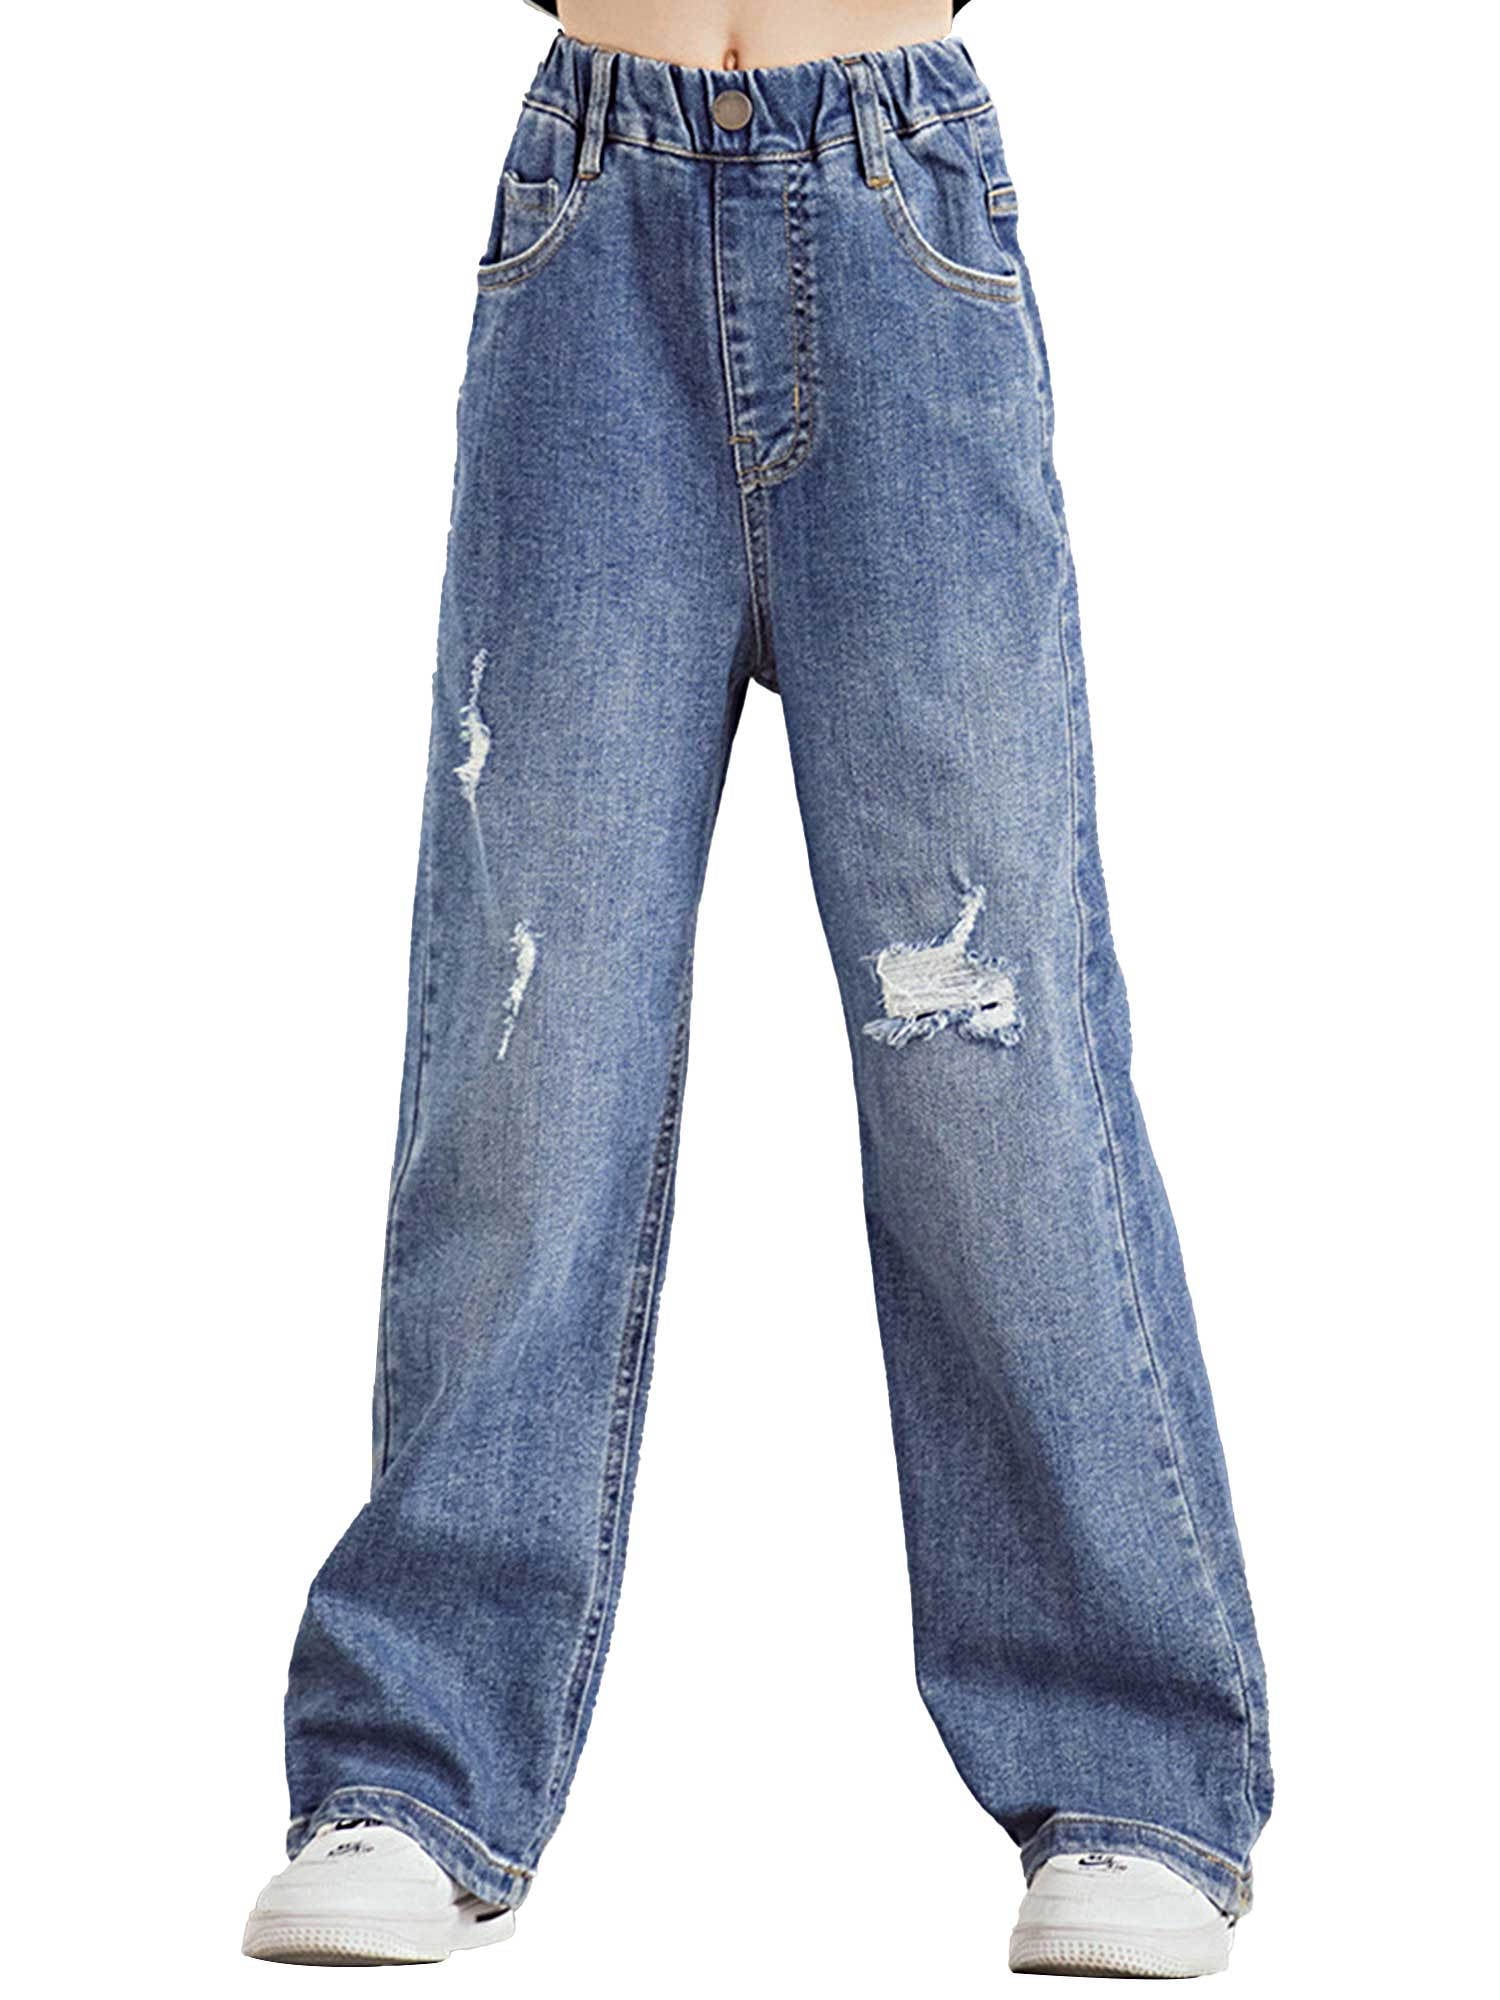 InCity Boys Tween 7-14 Years Mid-Rise Blue Cotton Plass Pants